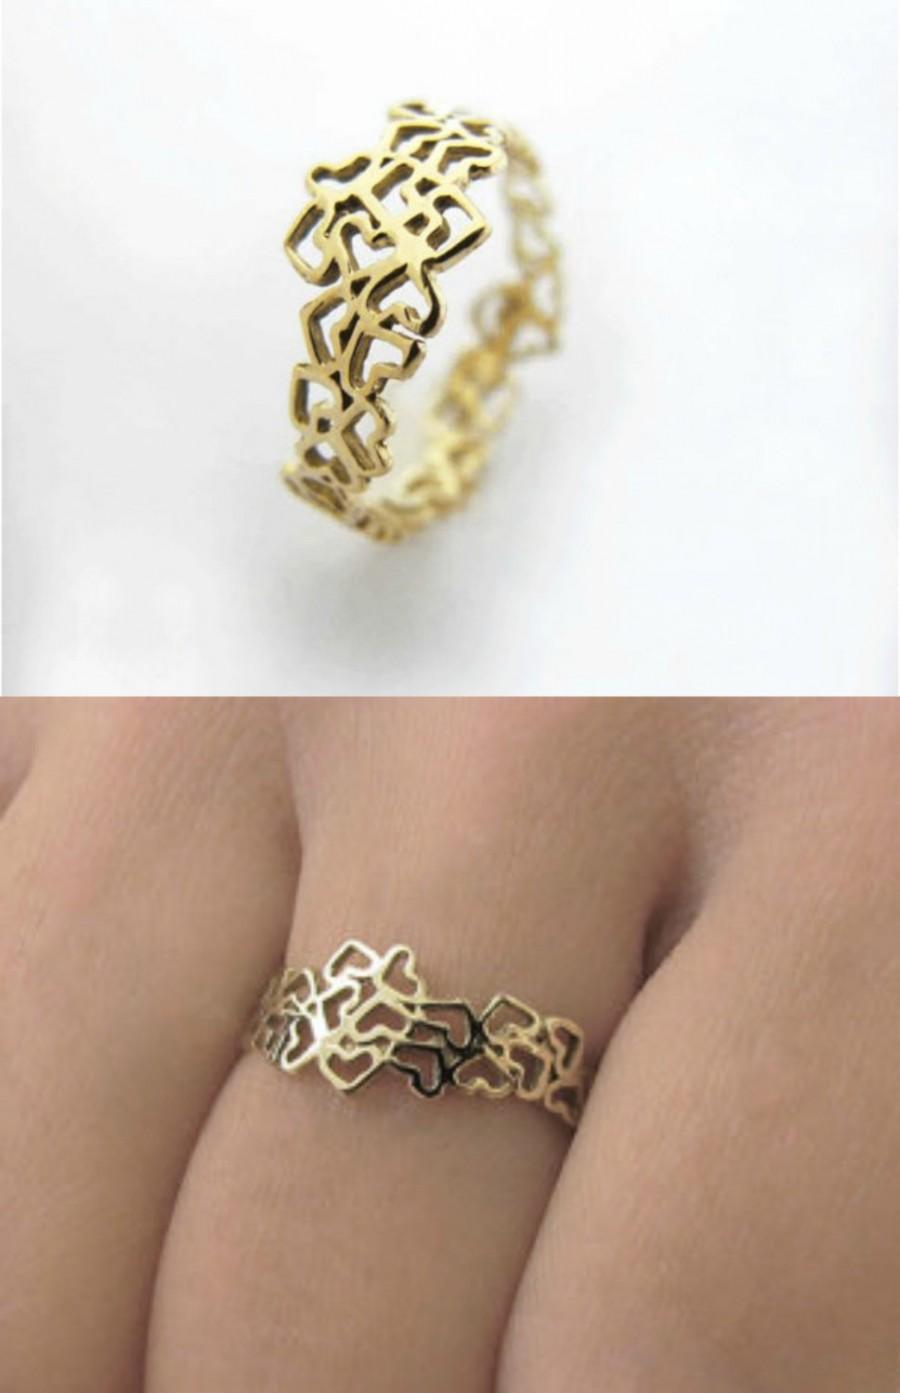 زفاف - Gold Heart Ring, Heart Promise Ring, Tiny Heart Ring Gold Ring, promise jewelry, Heart Jewelry, Commitment ring, Bridesmaid Ring nickel free